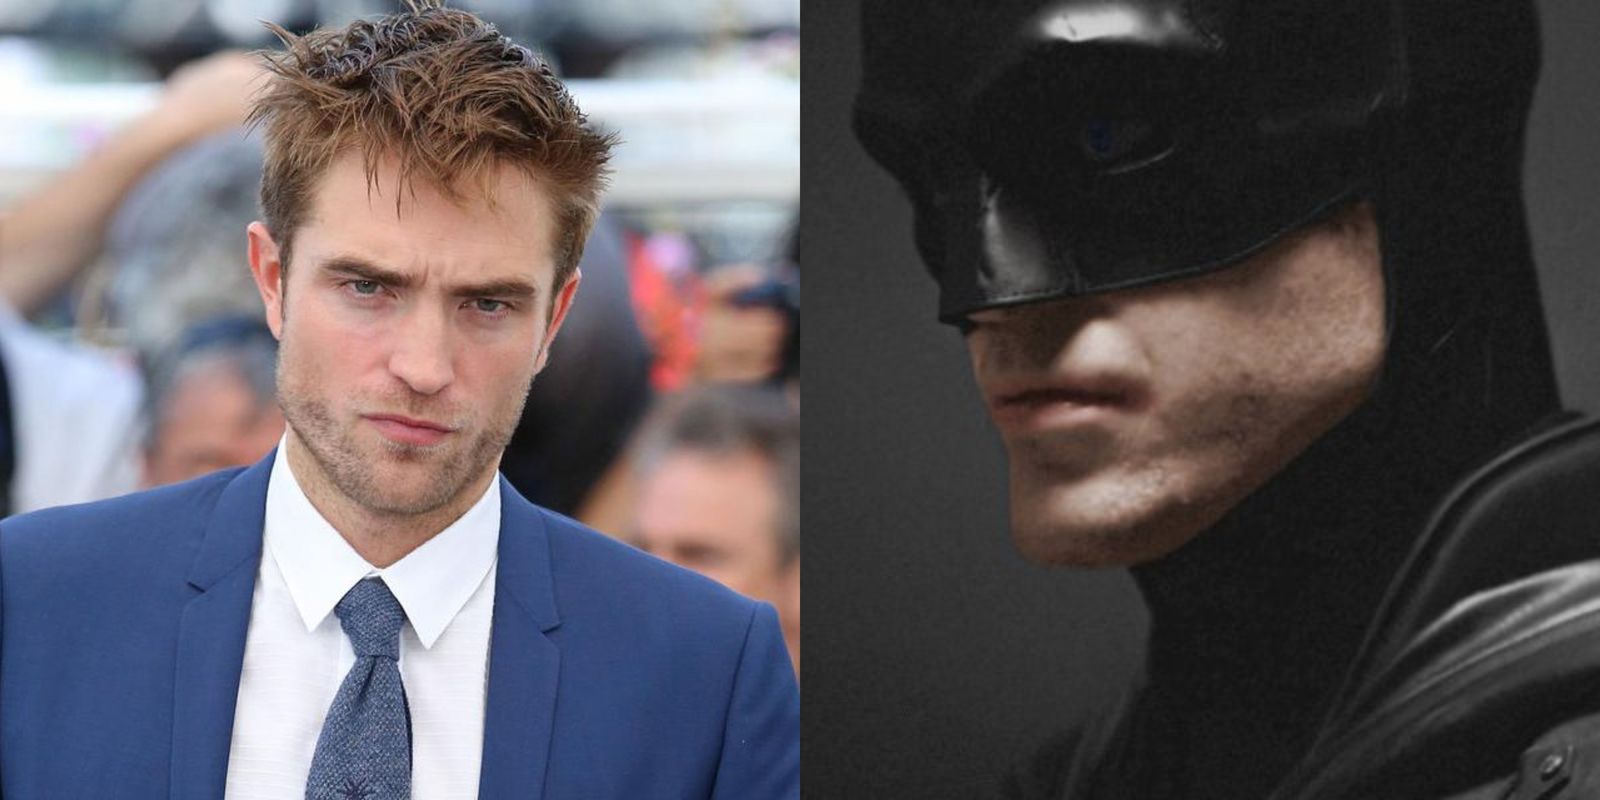 The Batman: Production Of Robert Pattinson’s Film Shut Down For Two Weeks Due To Coronavirus Scare